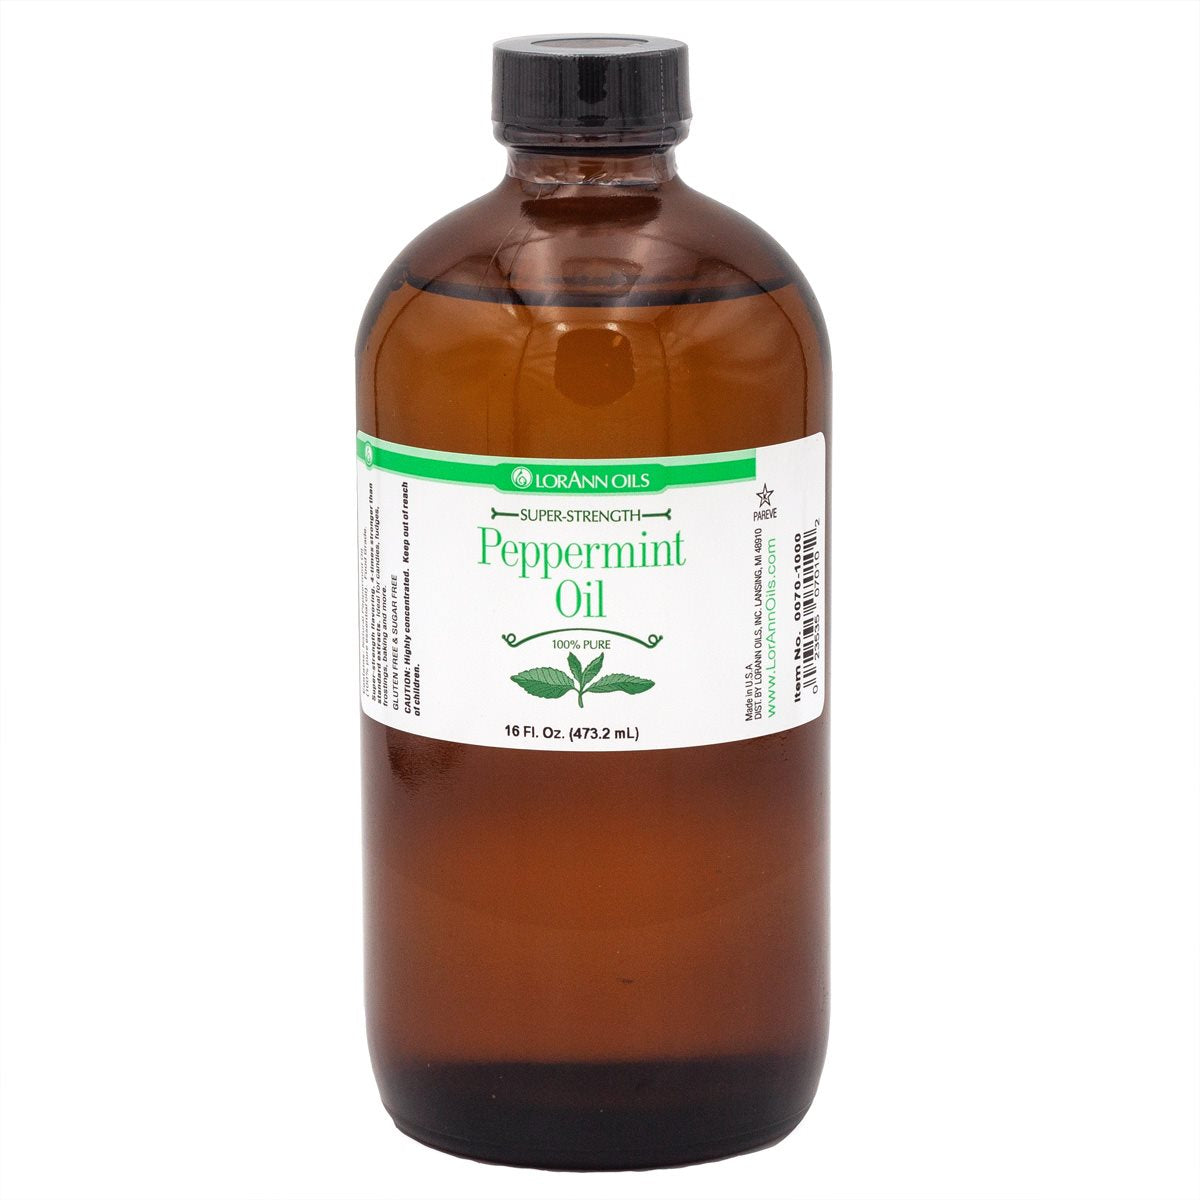 Shop Food Grade Peppermint Oil online